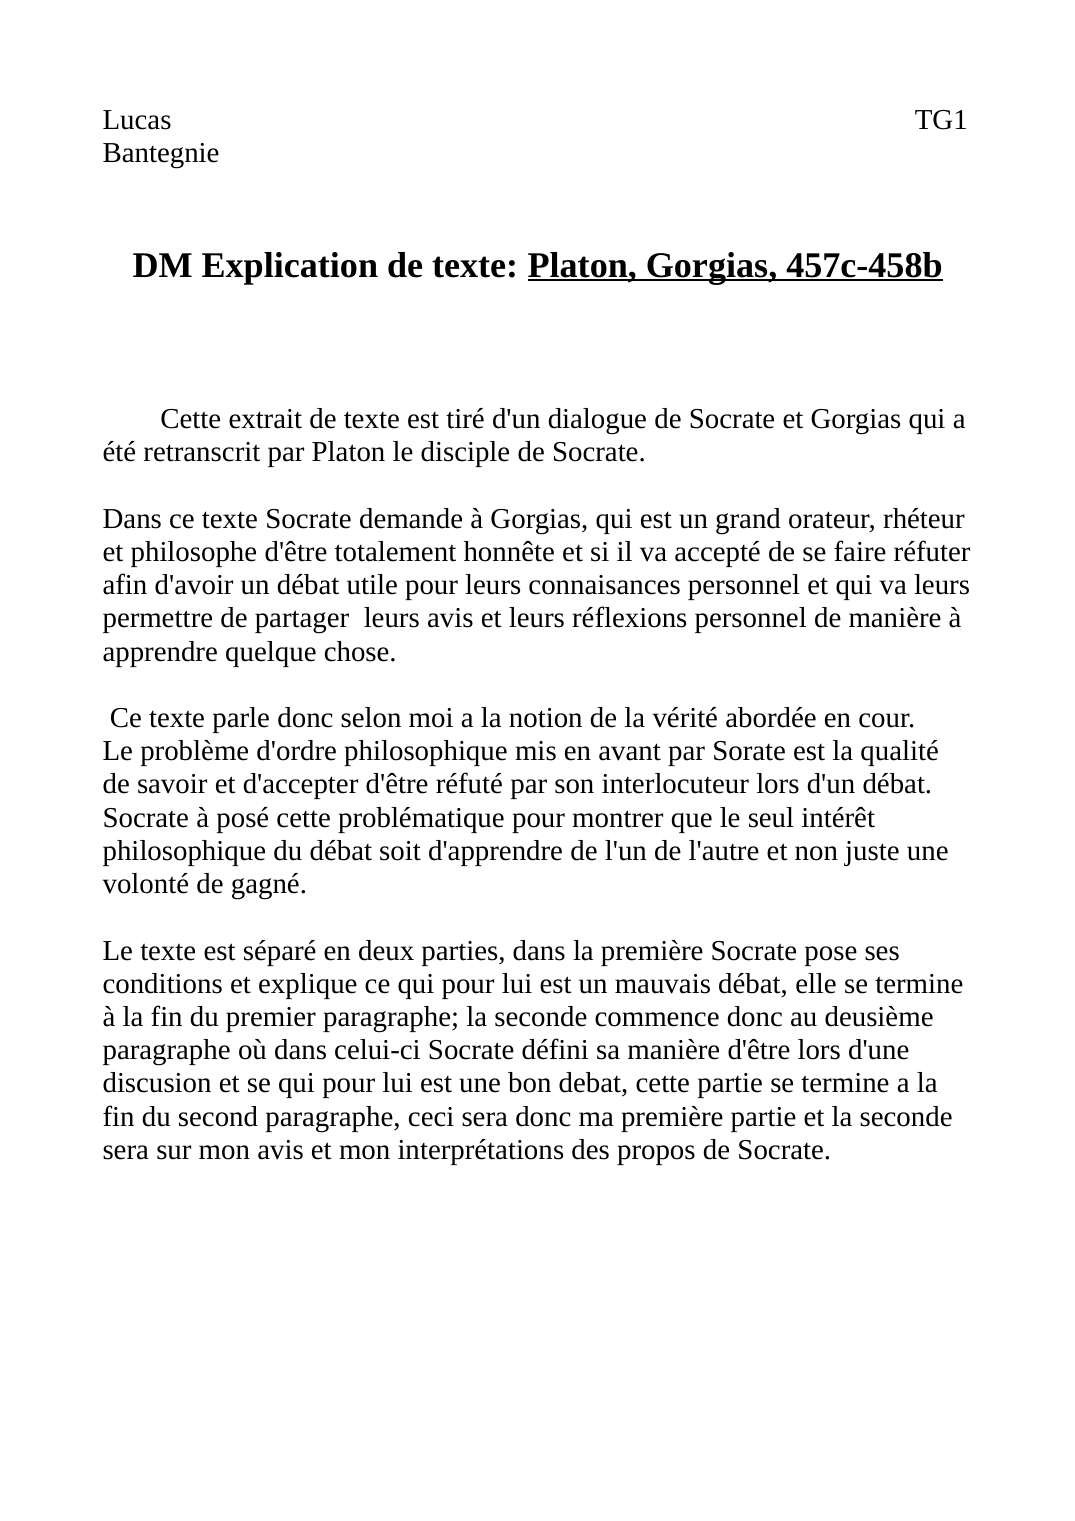 Prévisualisation du document DM Explication de texte: Platon, Gorgias, 457c-458b